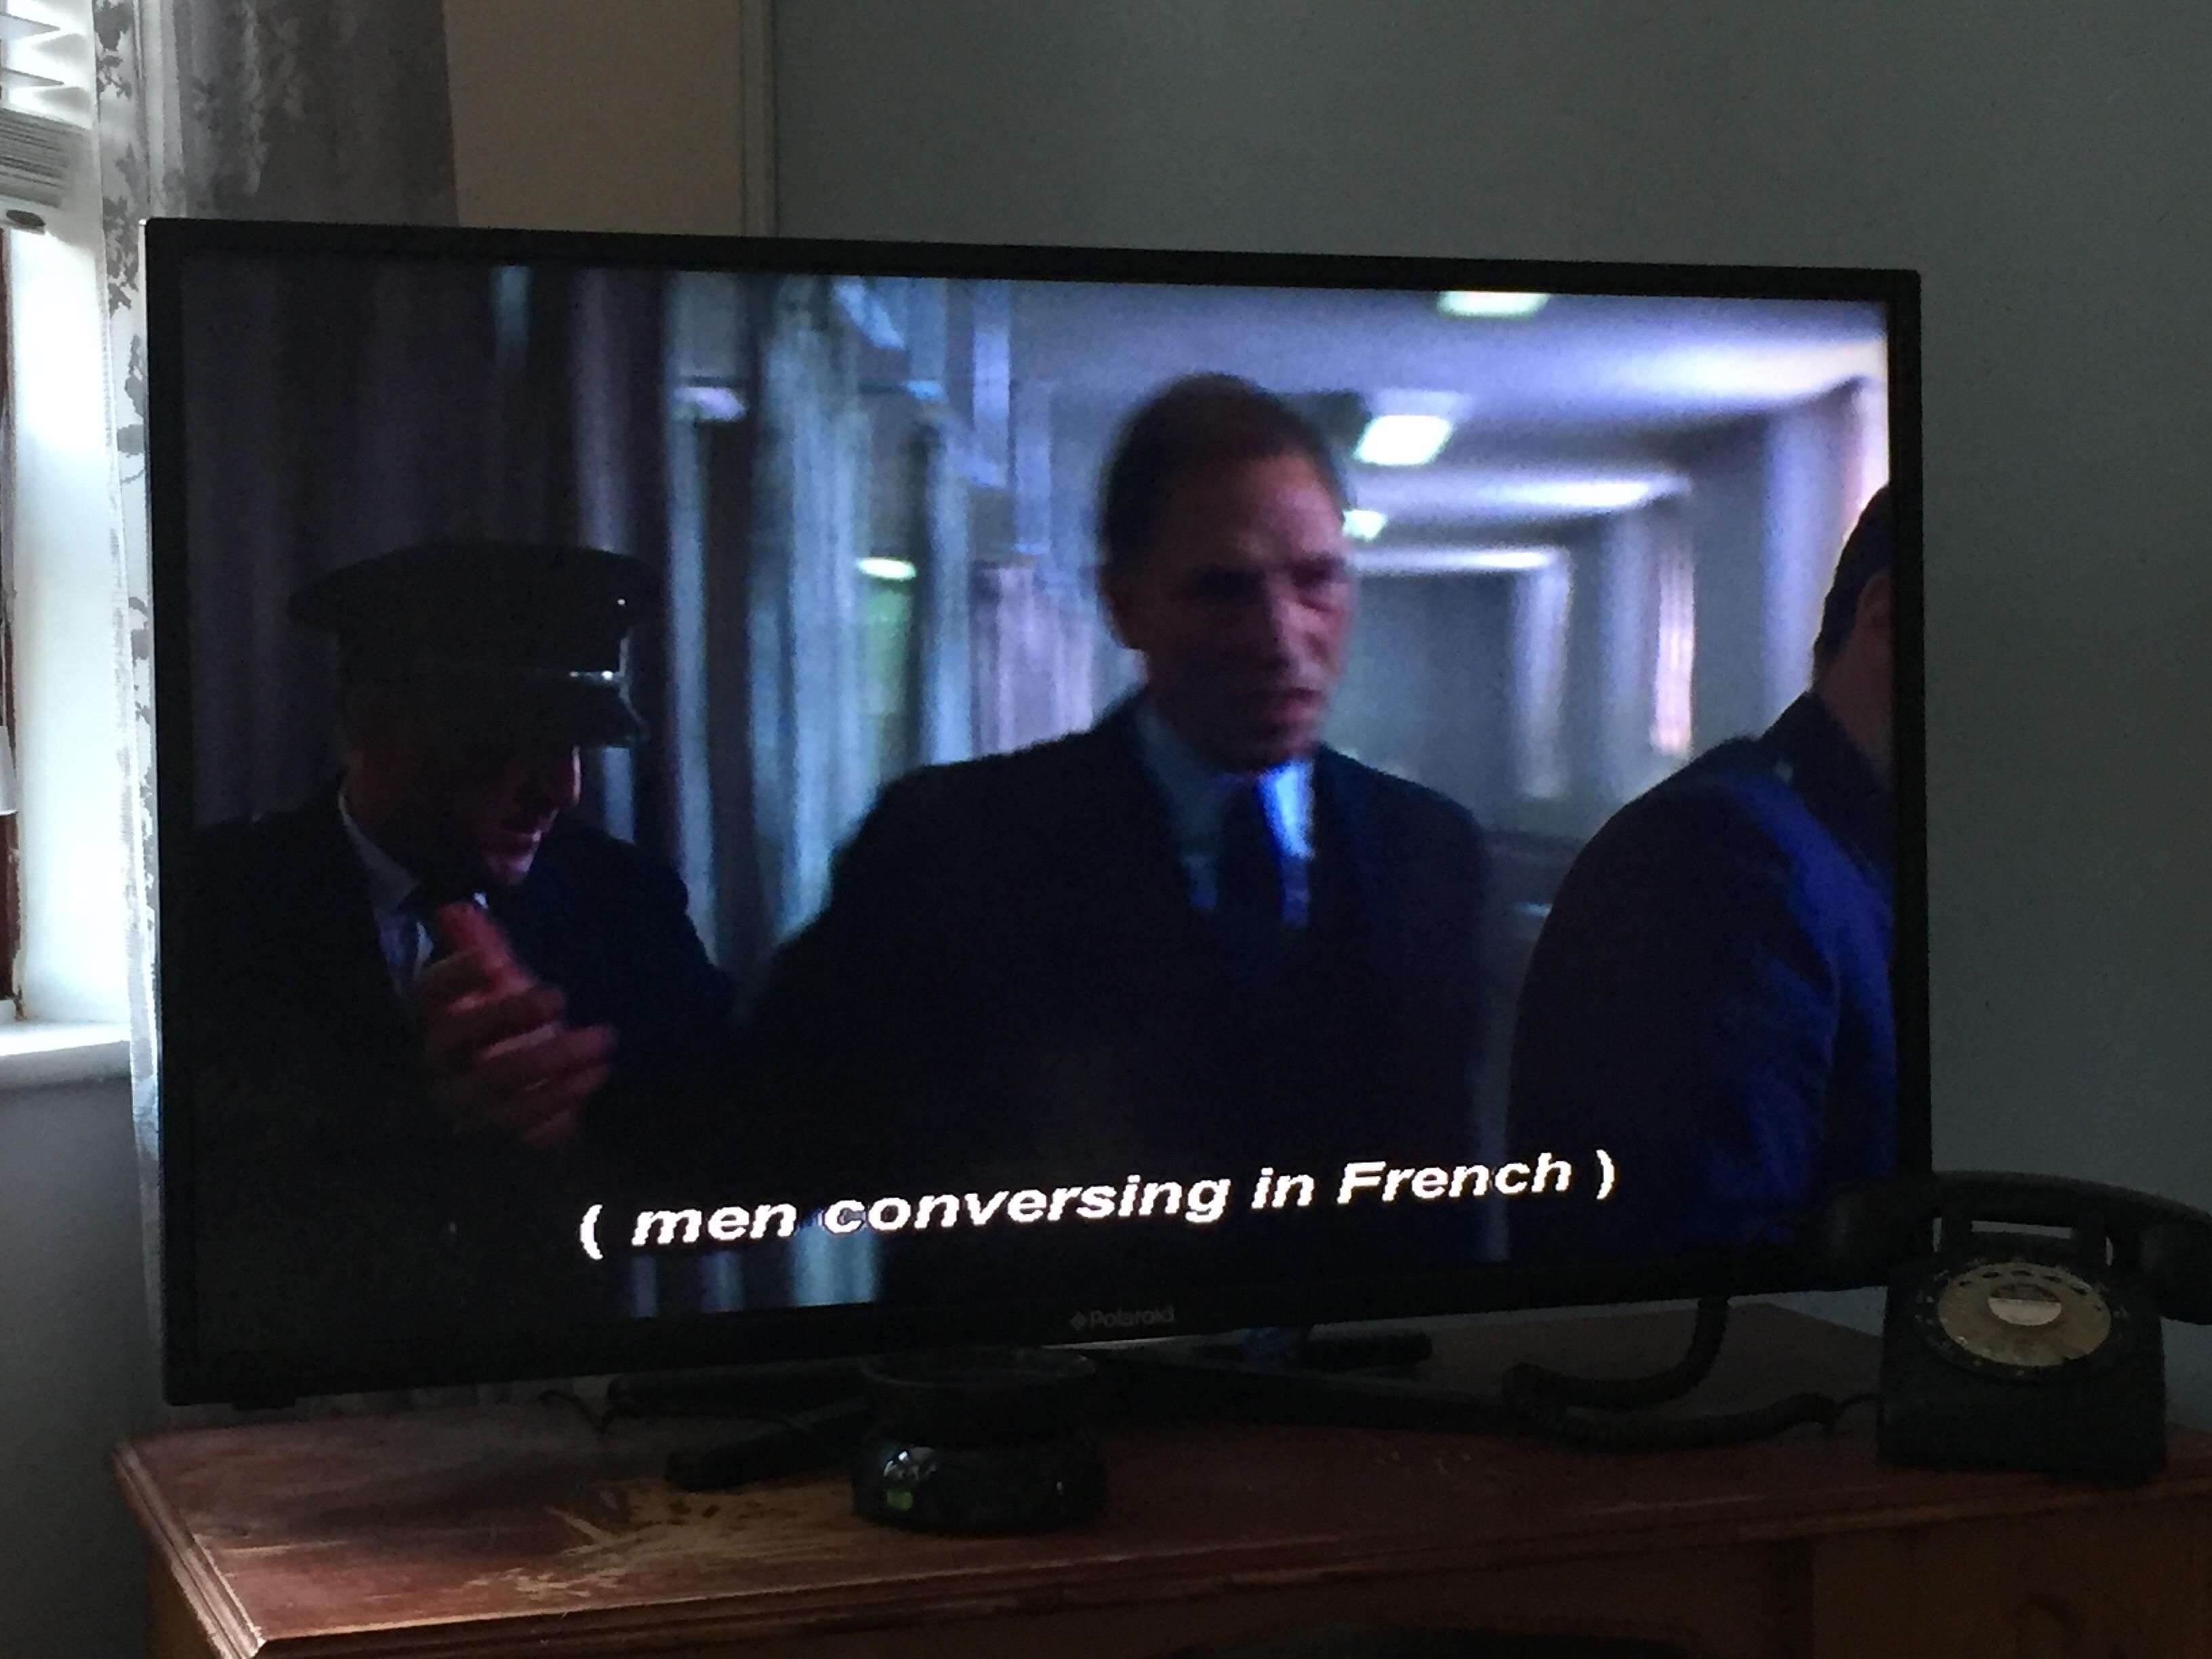 Thank god for subtitles.